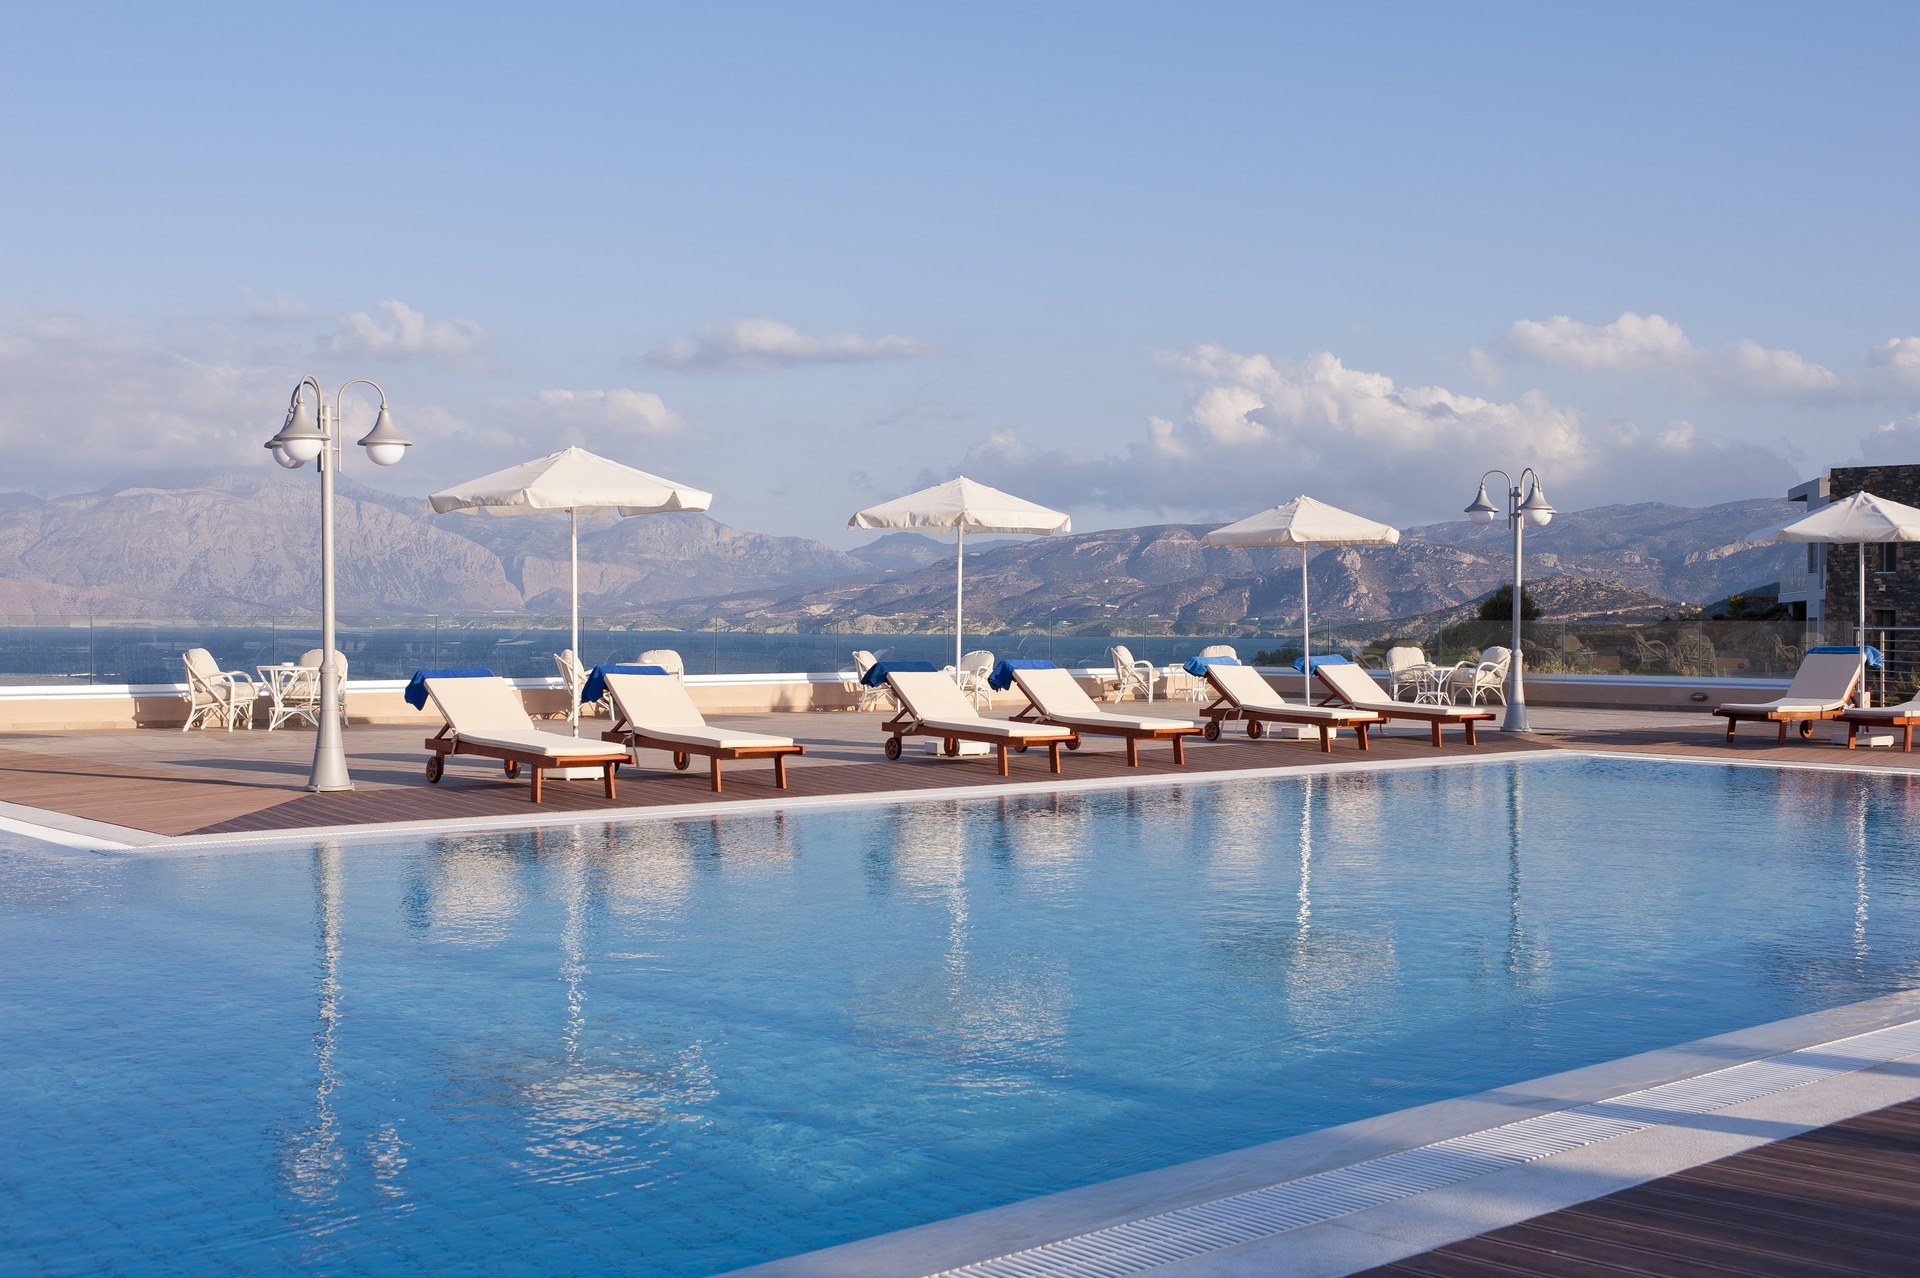 Crète - Agios Nikolaos - Grèce - Iles grecques - Hôtel Miramare 4*